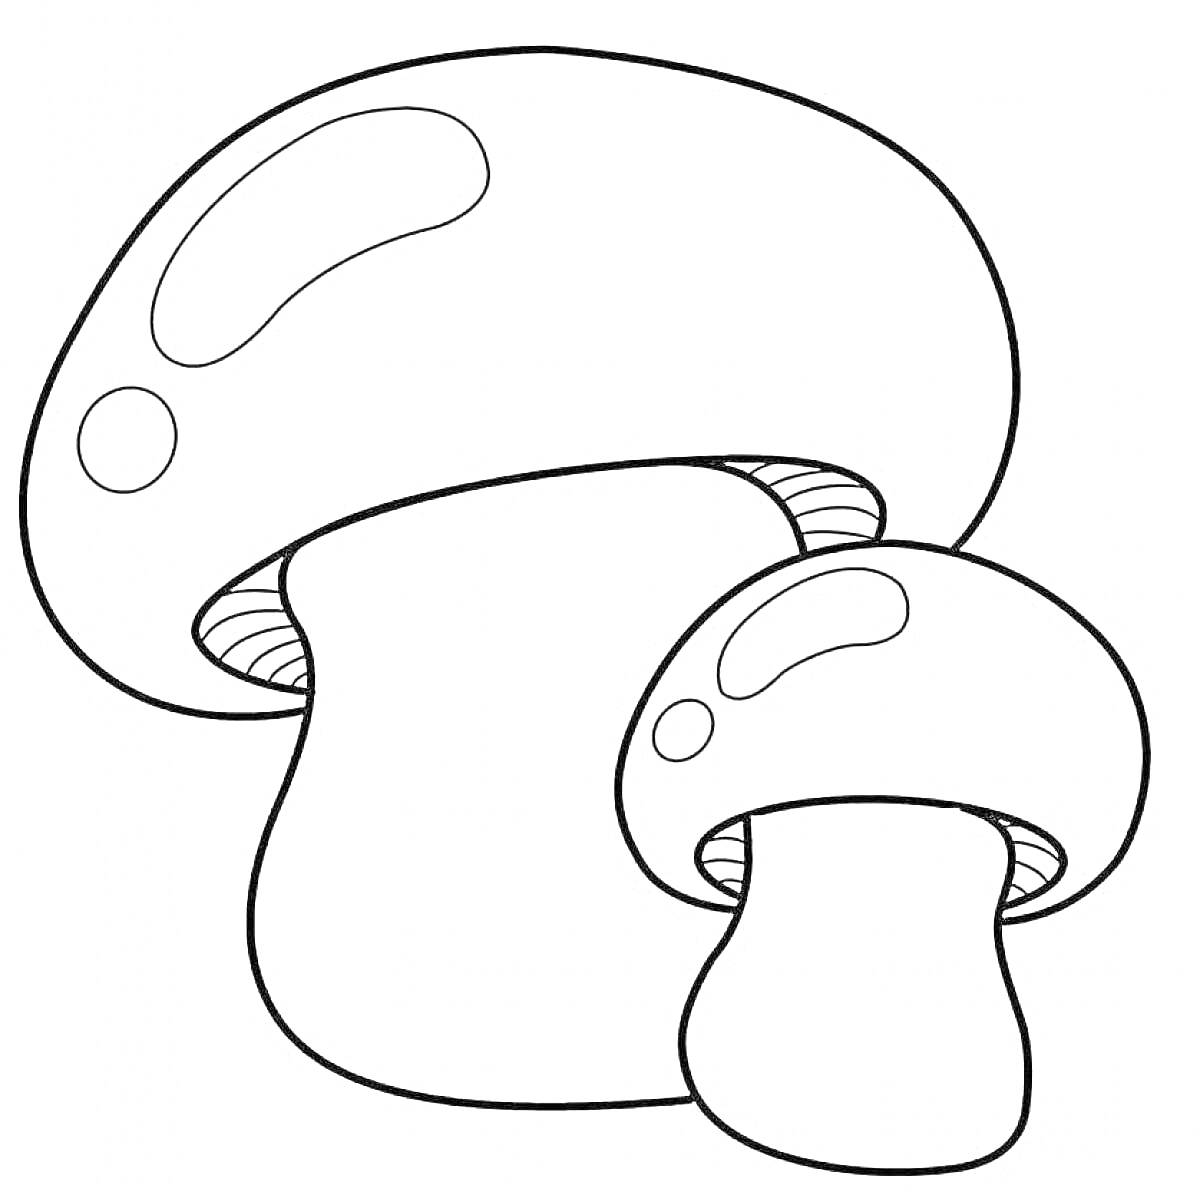 Раскраска Два белых гриба